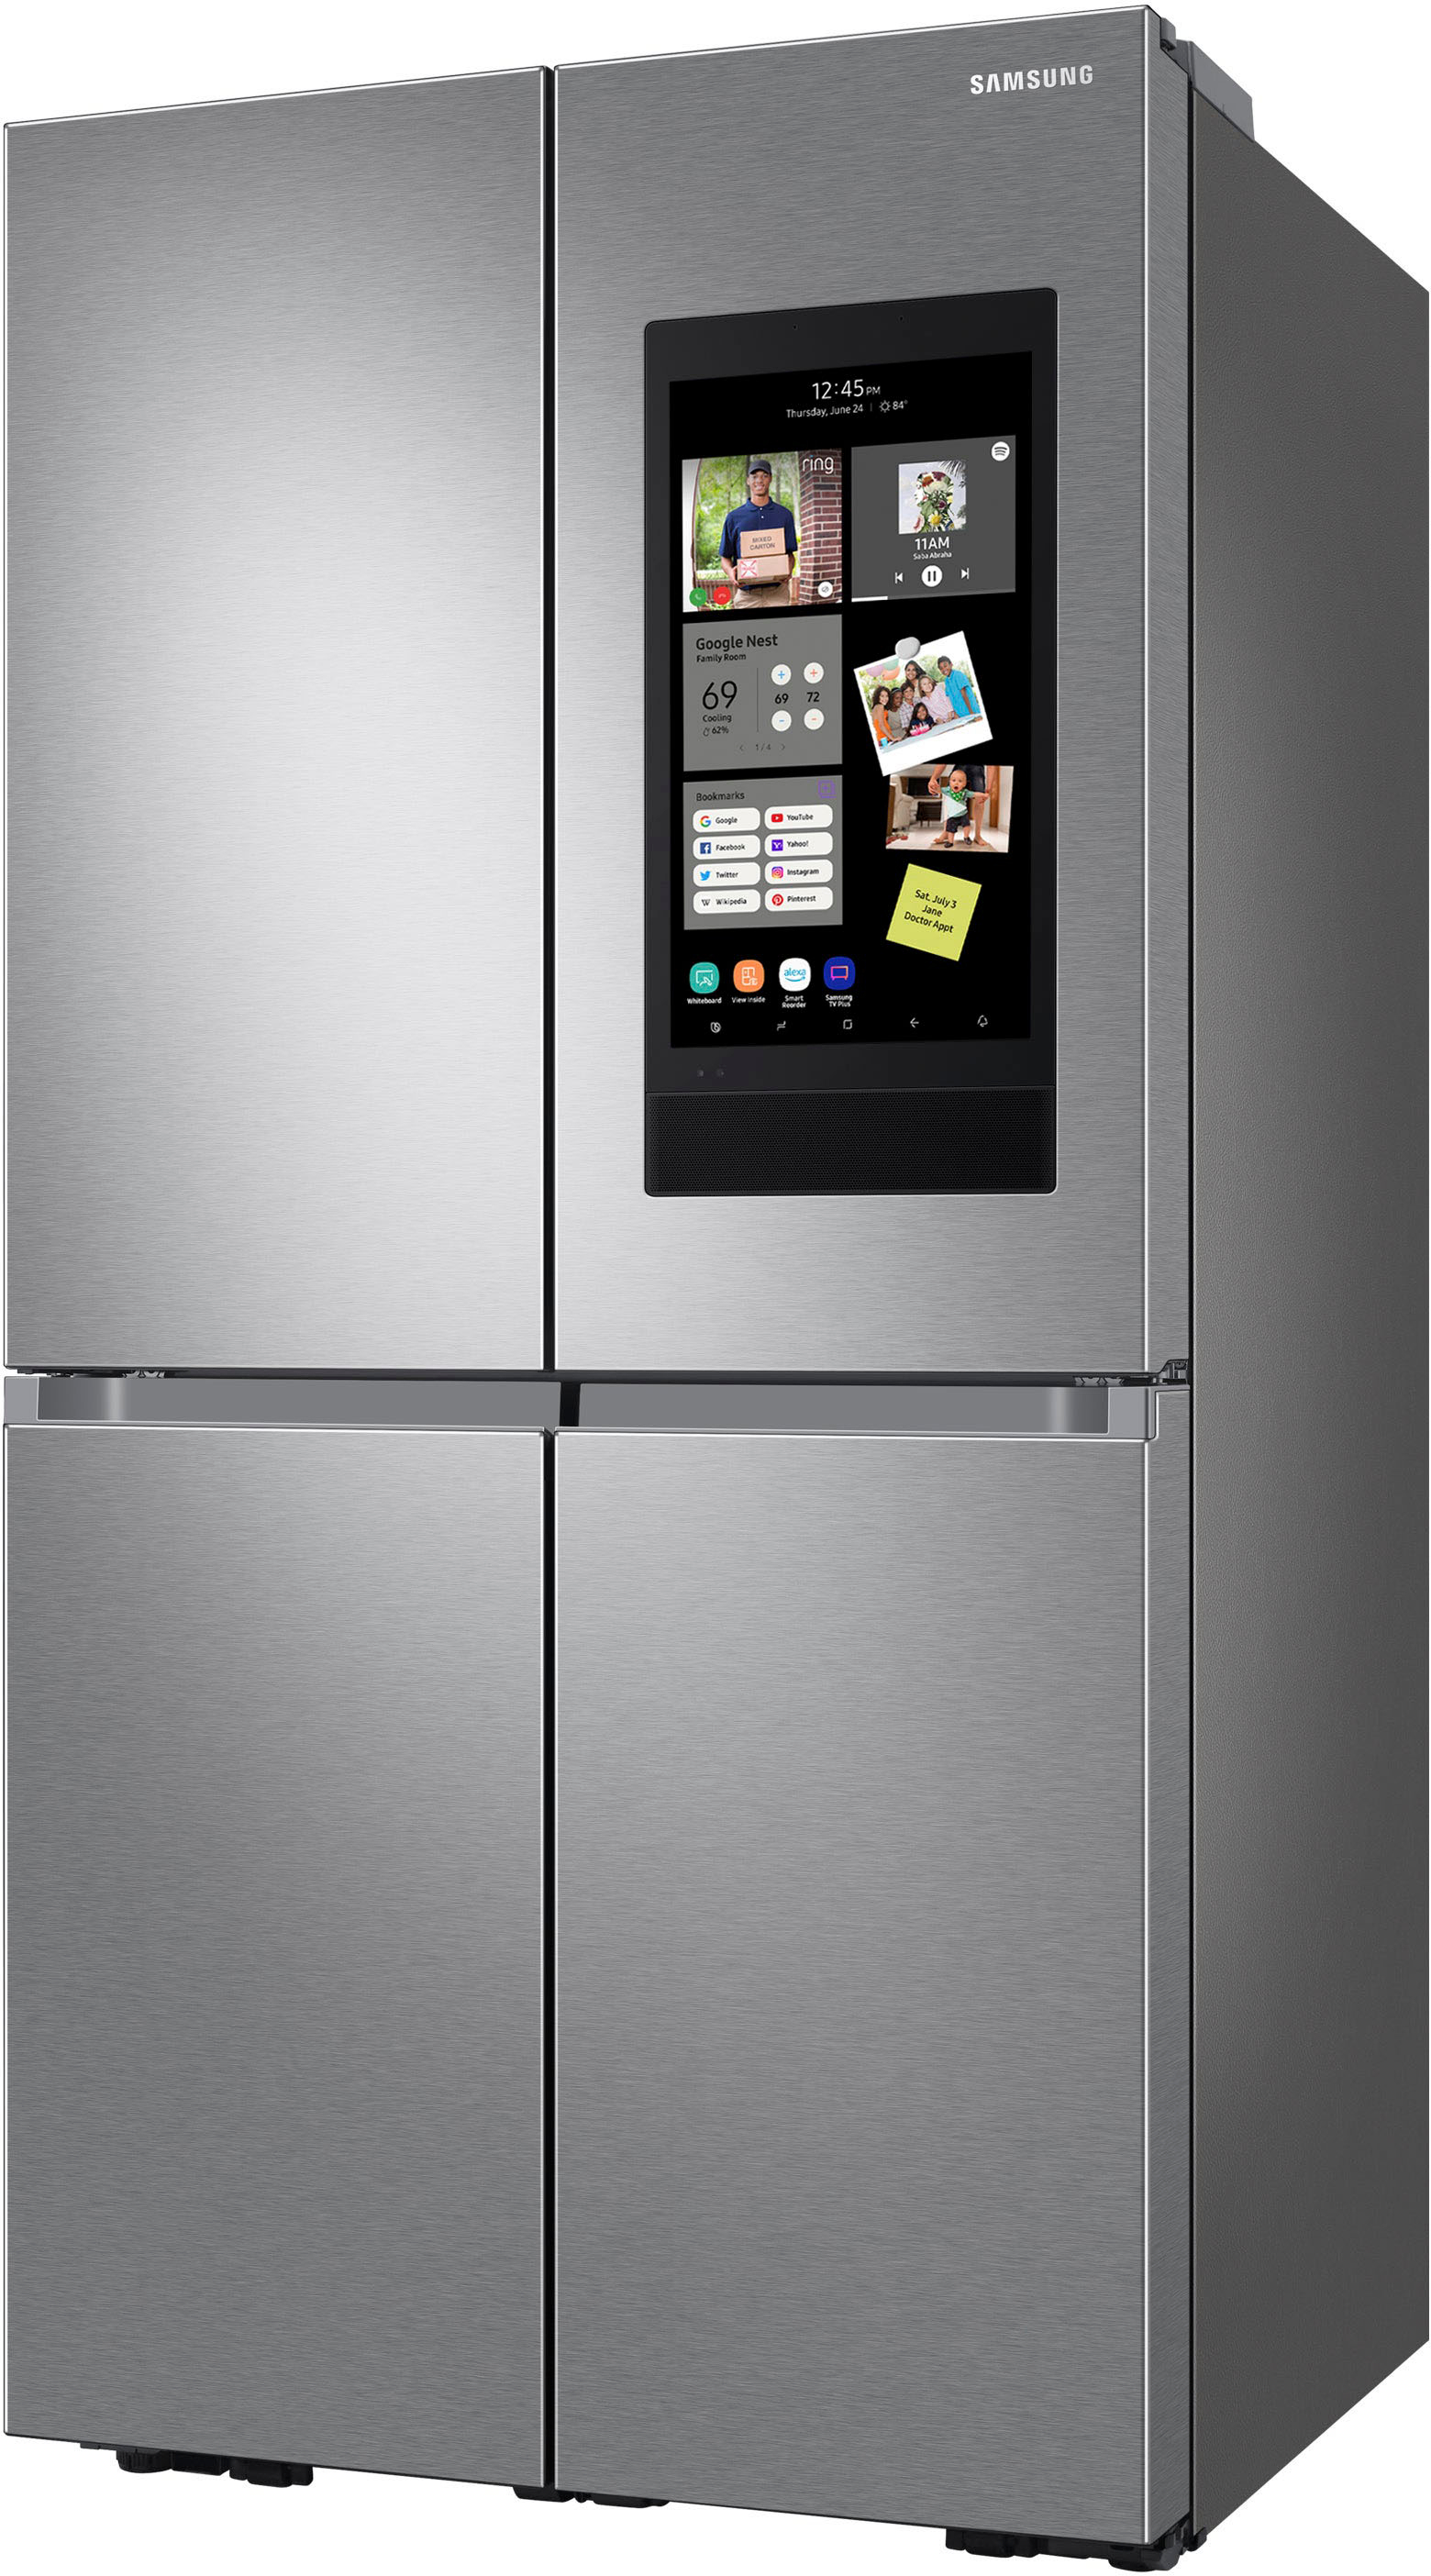 Samsung refrigerator setup and installation